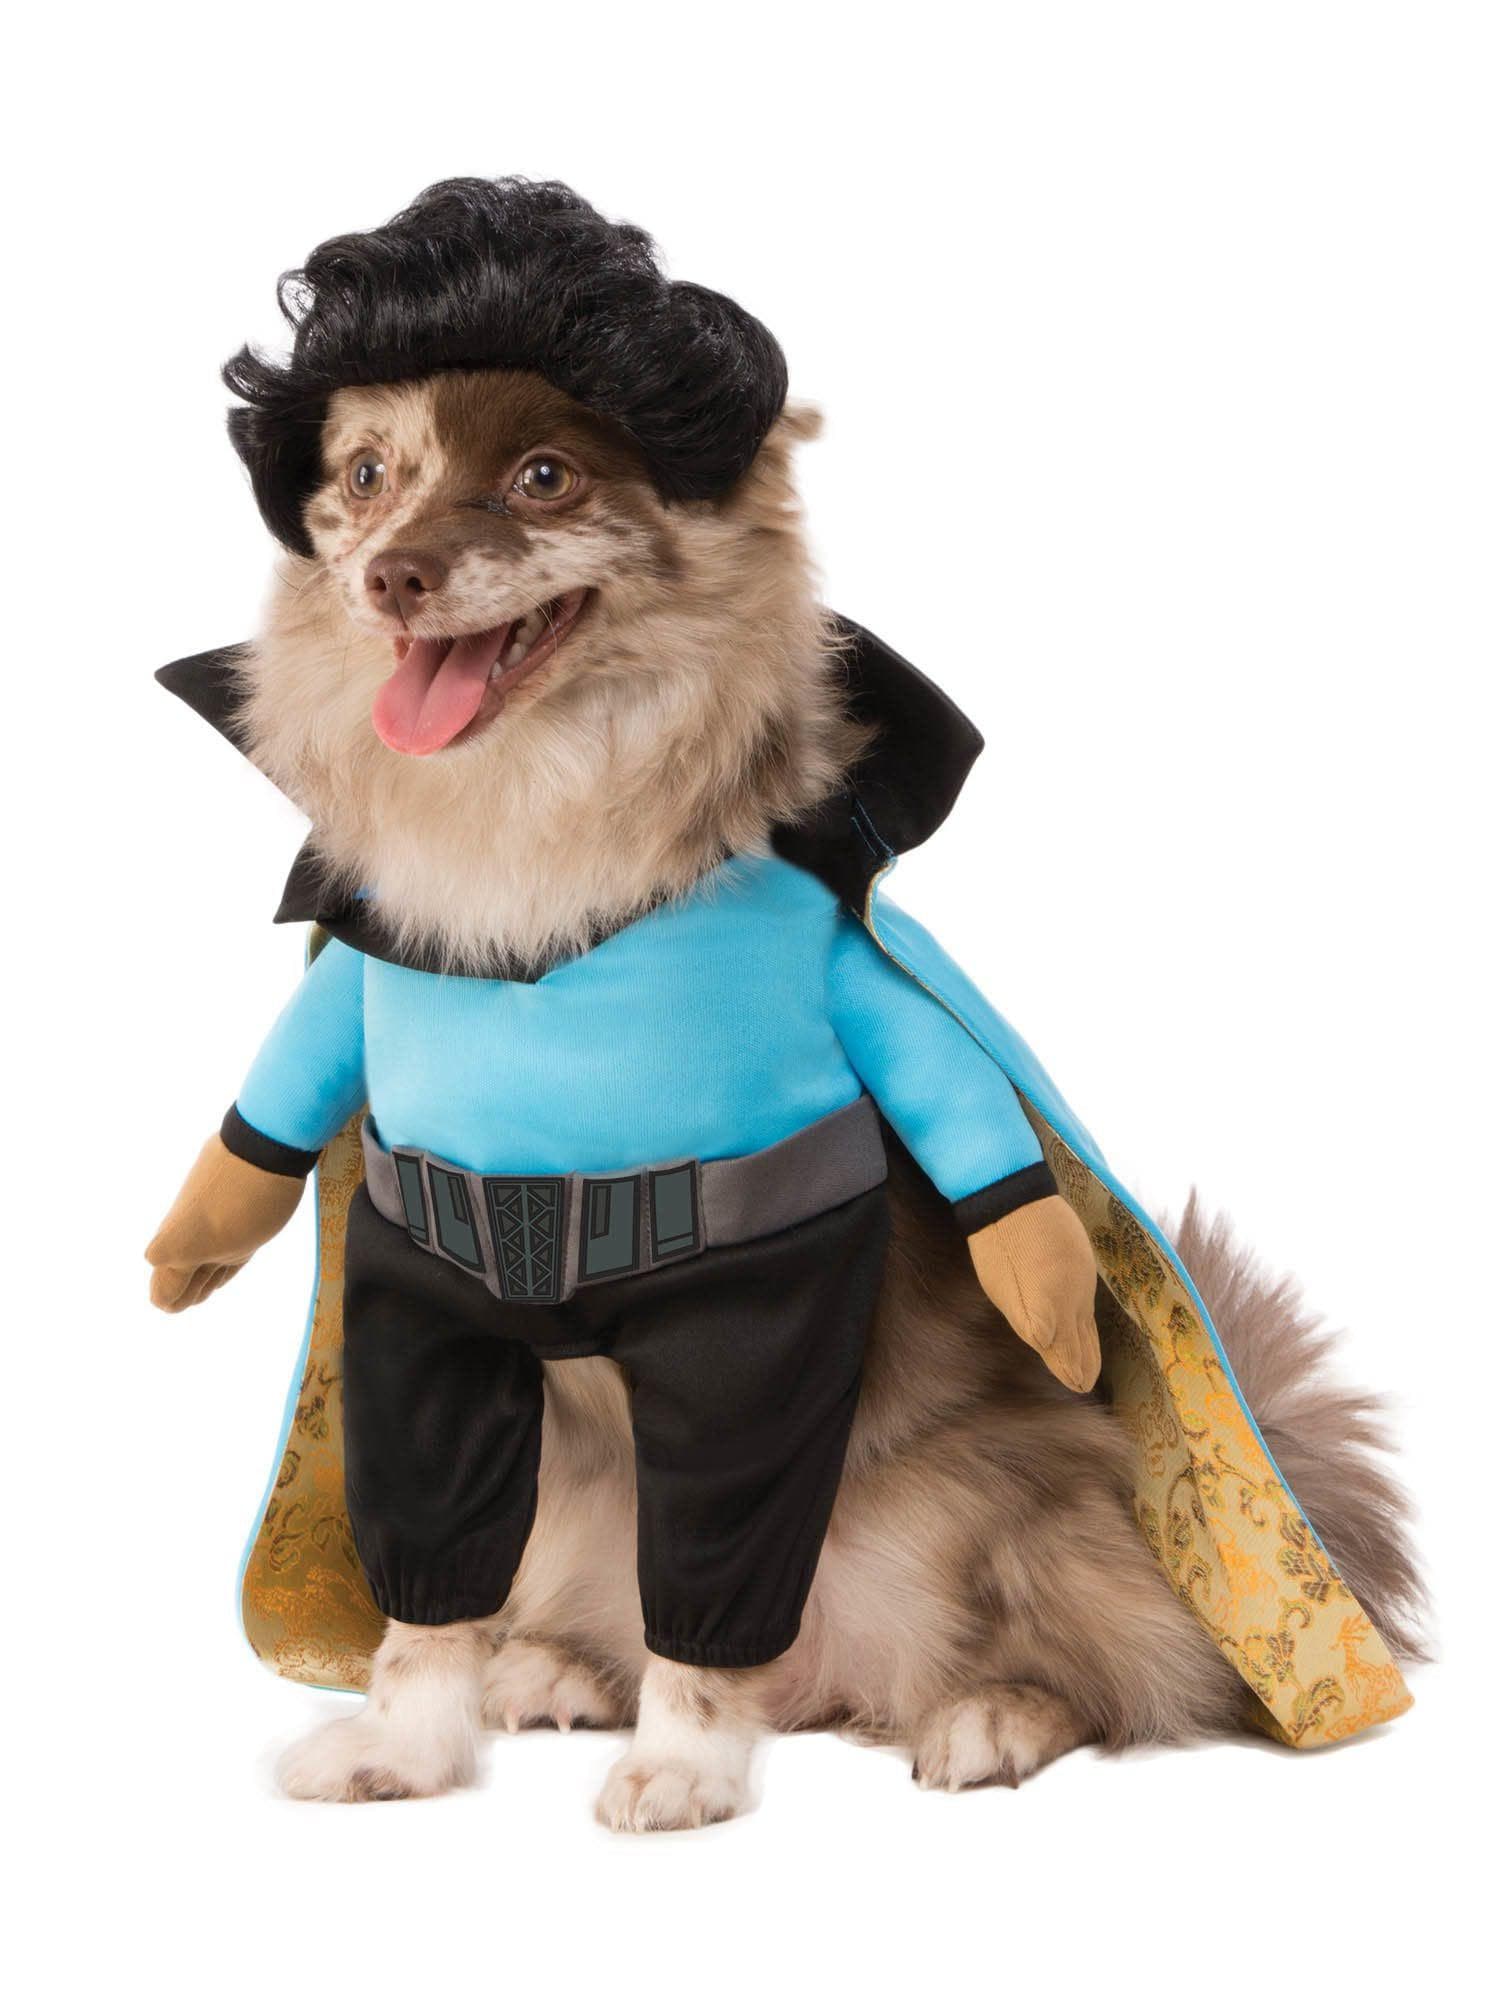 Star Wars Lando Calrissian Walking Pet Costume - costumes.com